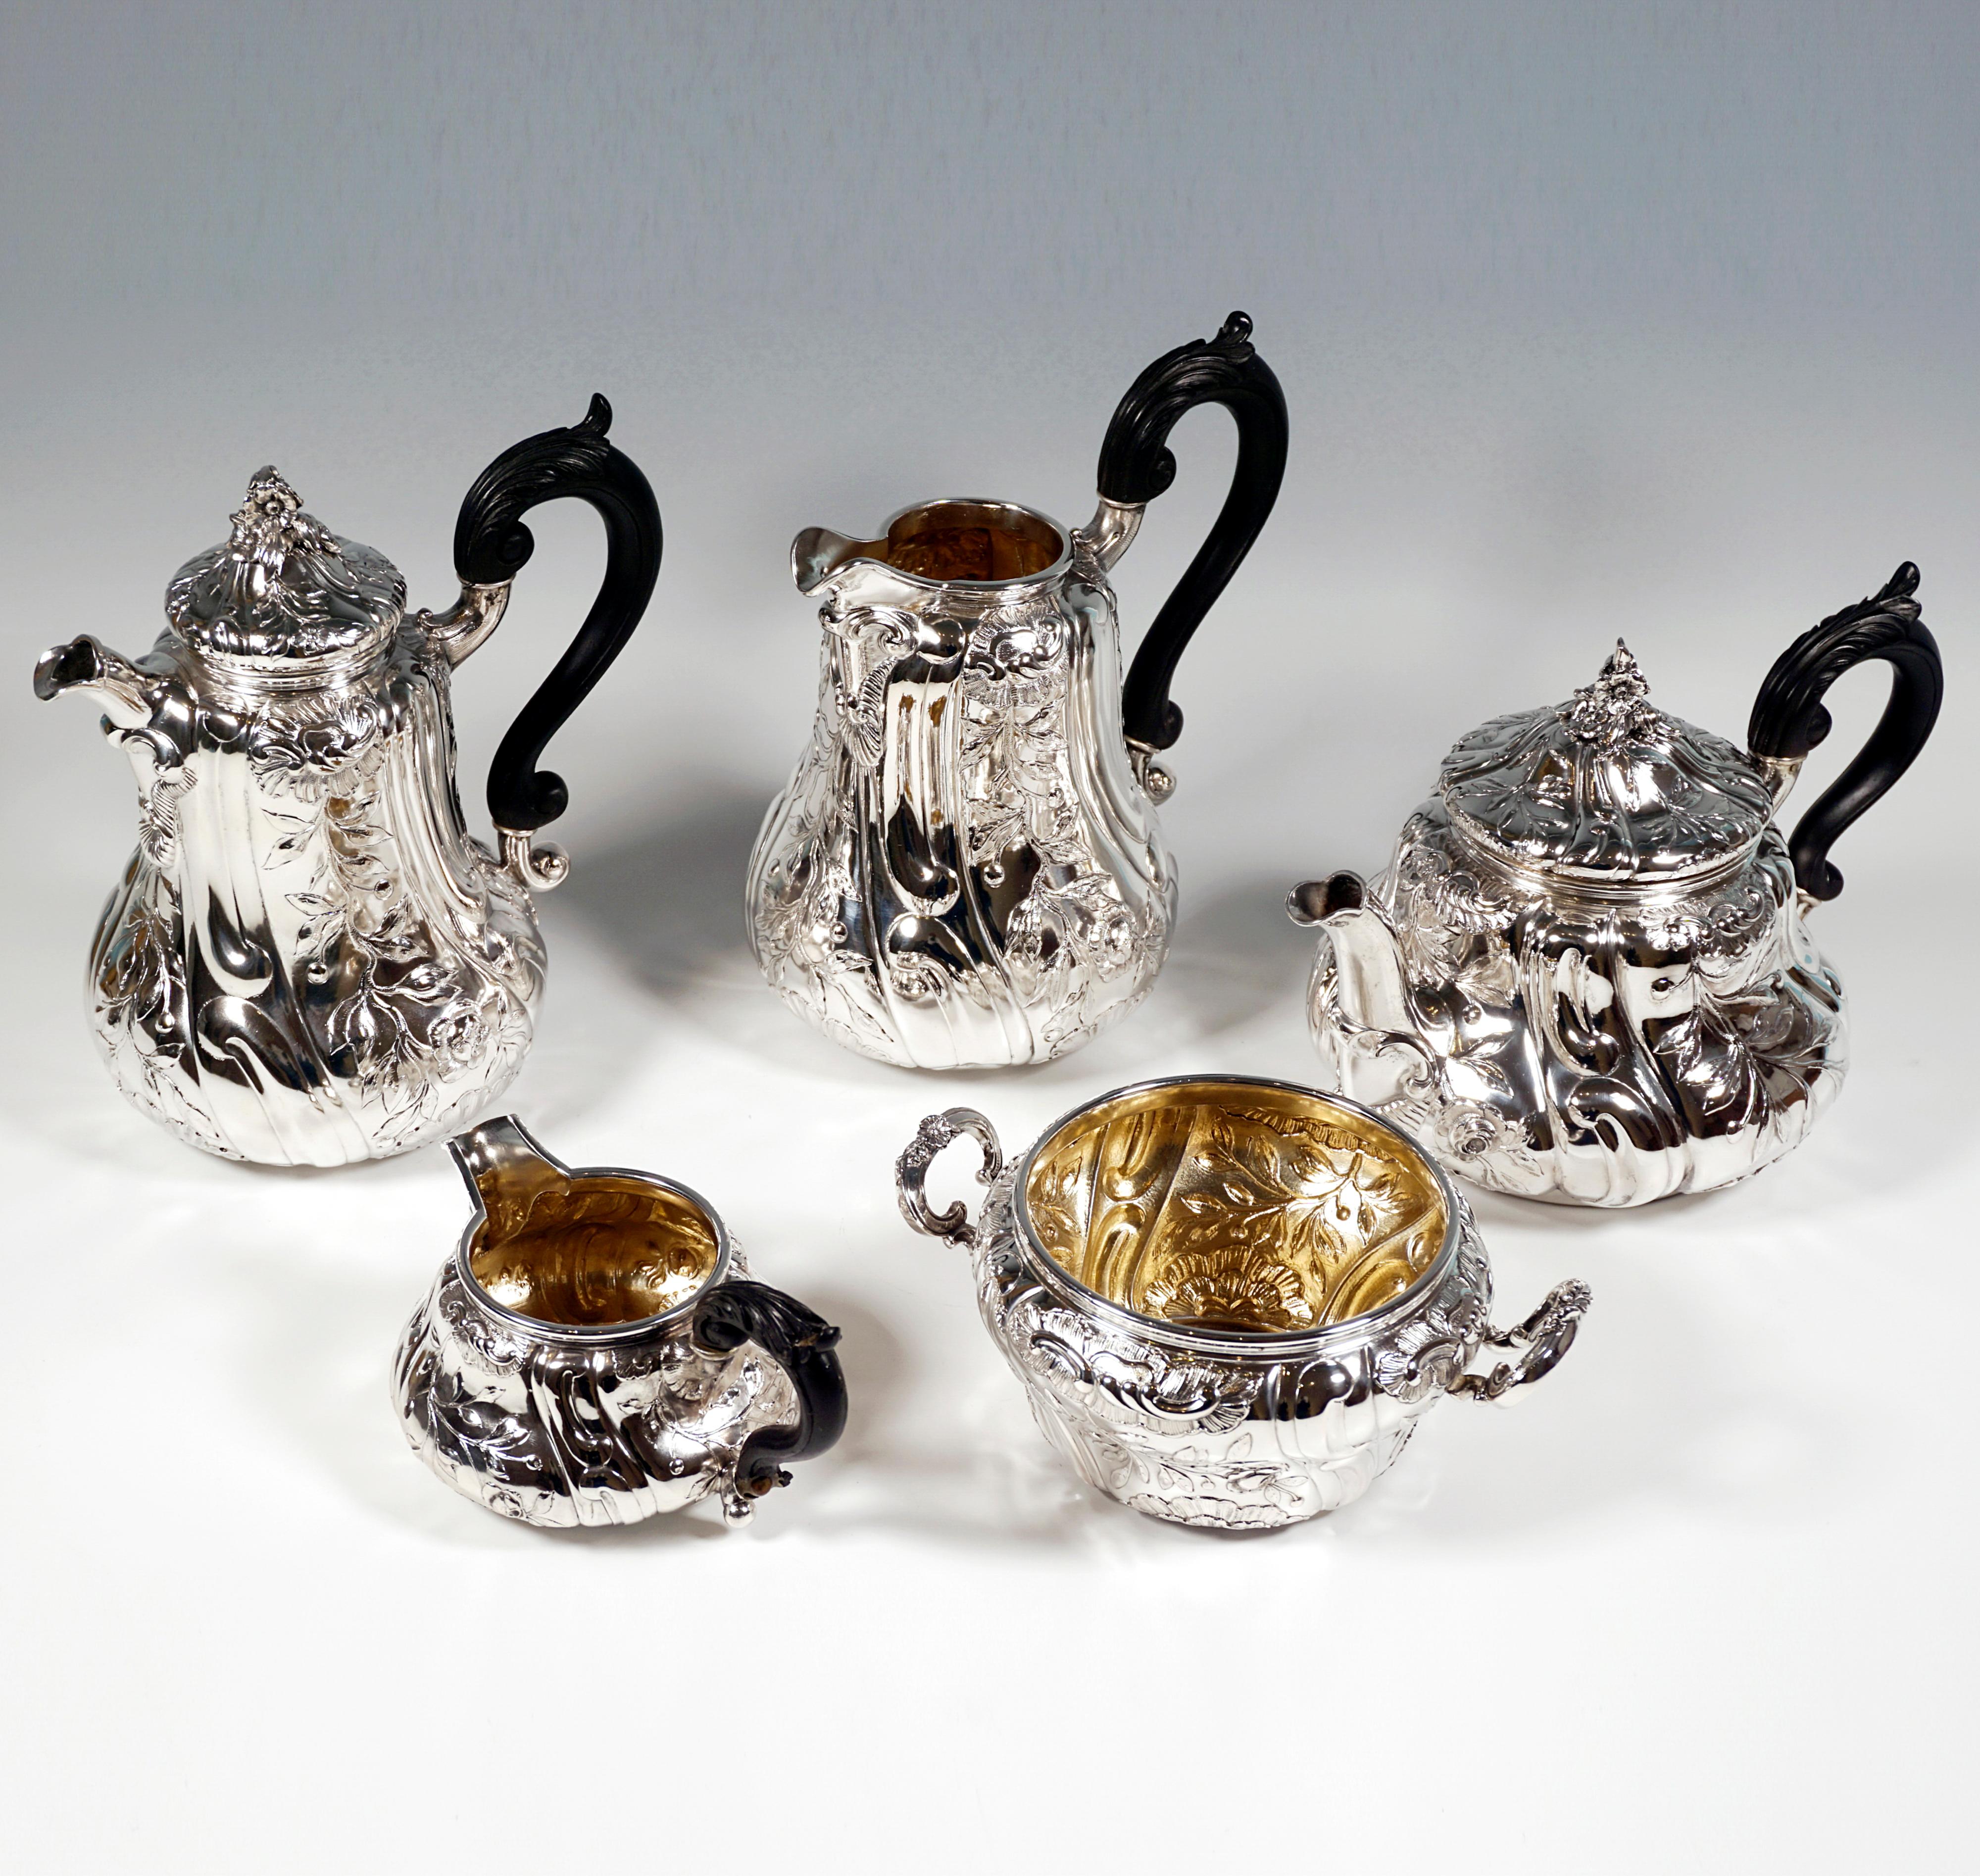 Art Nouveau Silver Koffee And Tea Set With Samowar, Klinkosch Vienna, 1900 For Sale 1